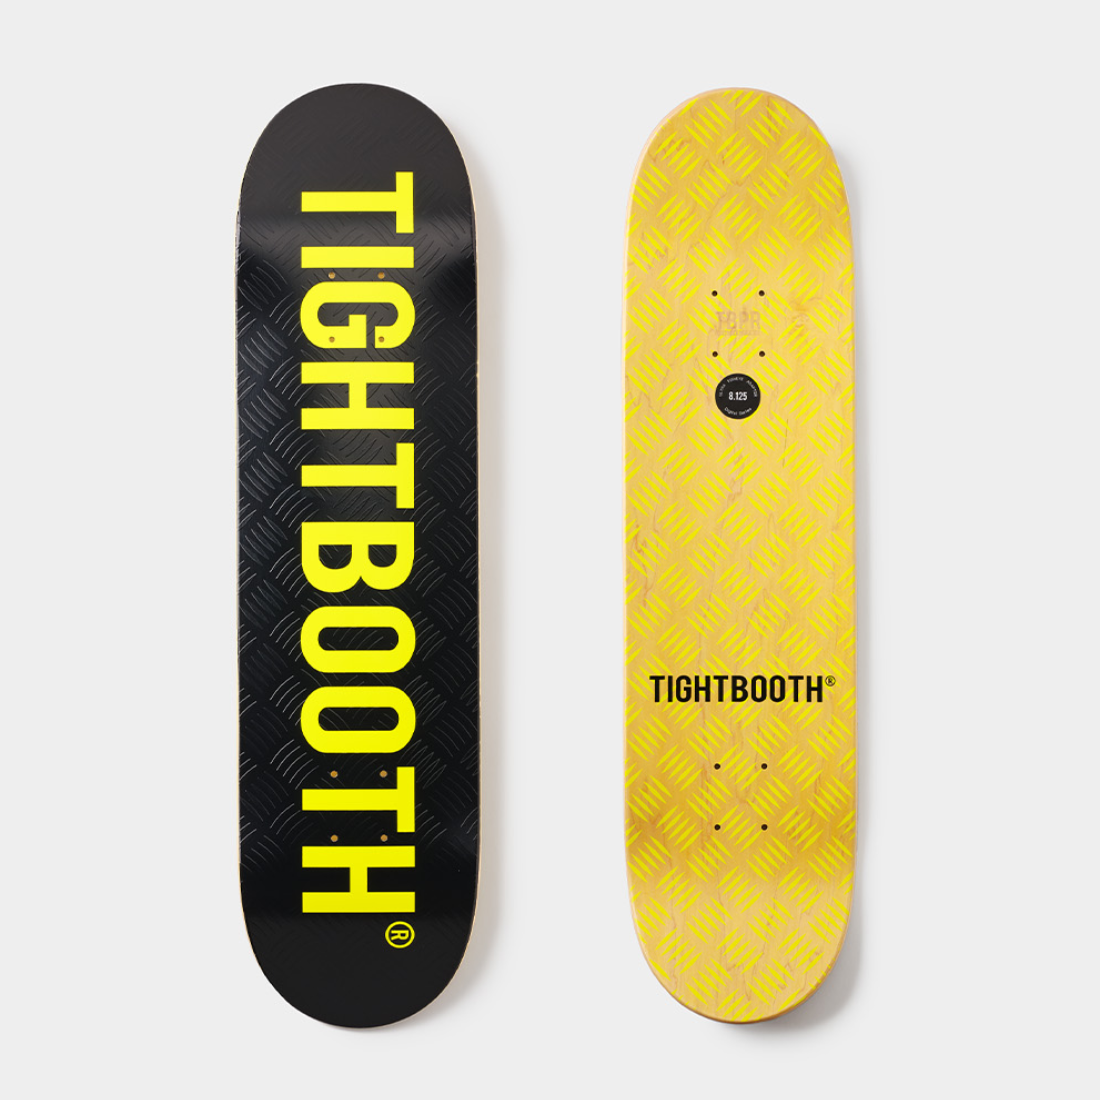 【8.125】TightBooth - Logo "Black×SafetyYellow"